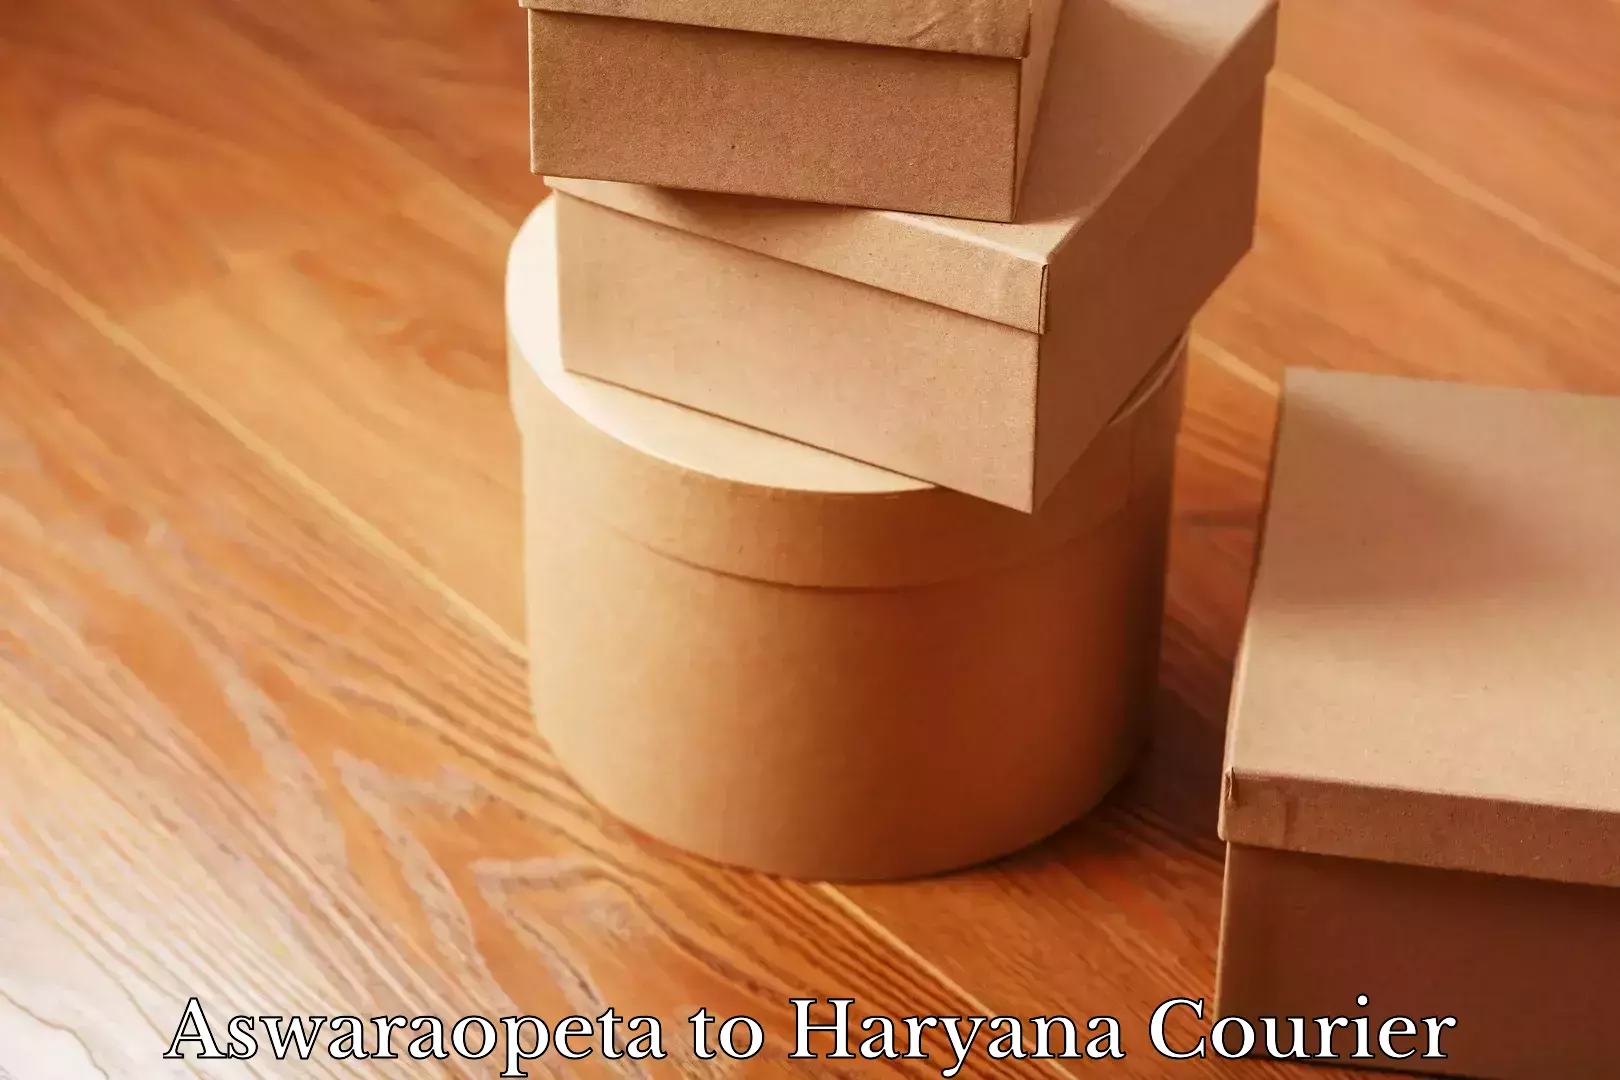 Courier service comparison Aswaraopeta to Haryana